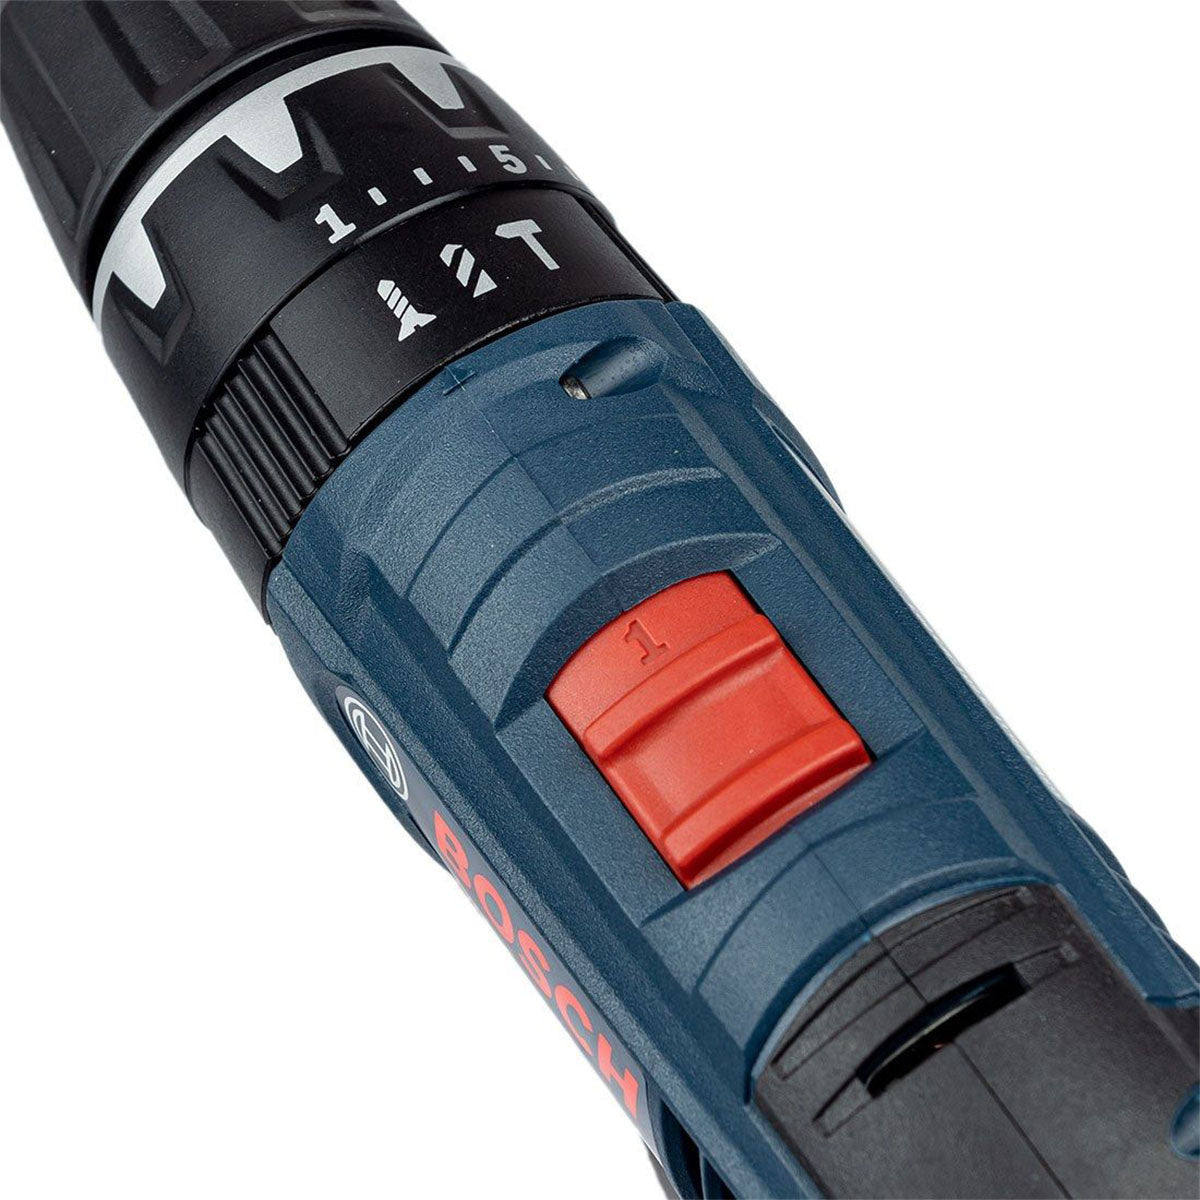 Bosch GSB 120-LI 12V Combi Drill With 2 x 2.0Ah Batteries Charger & Case 06019G8170